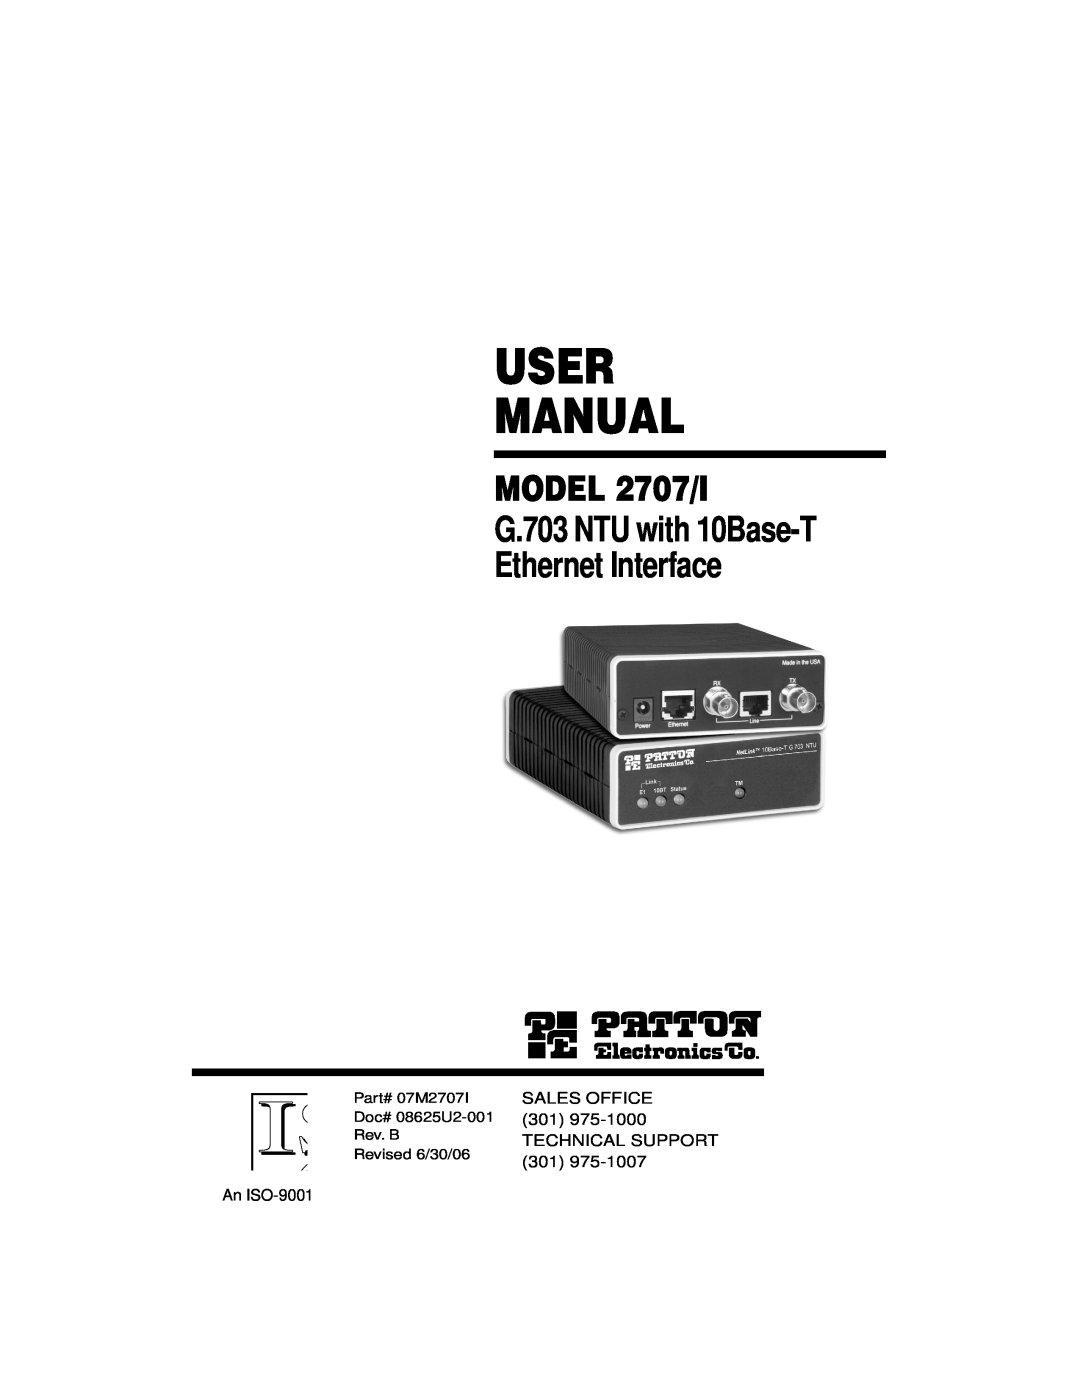 Patton electronic user manual User Manual, MODEL 2707/I G.703 NTU with 10Base-T Ethernet Interface 